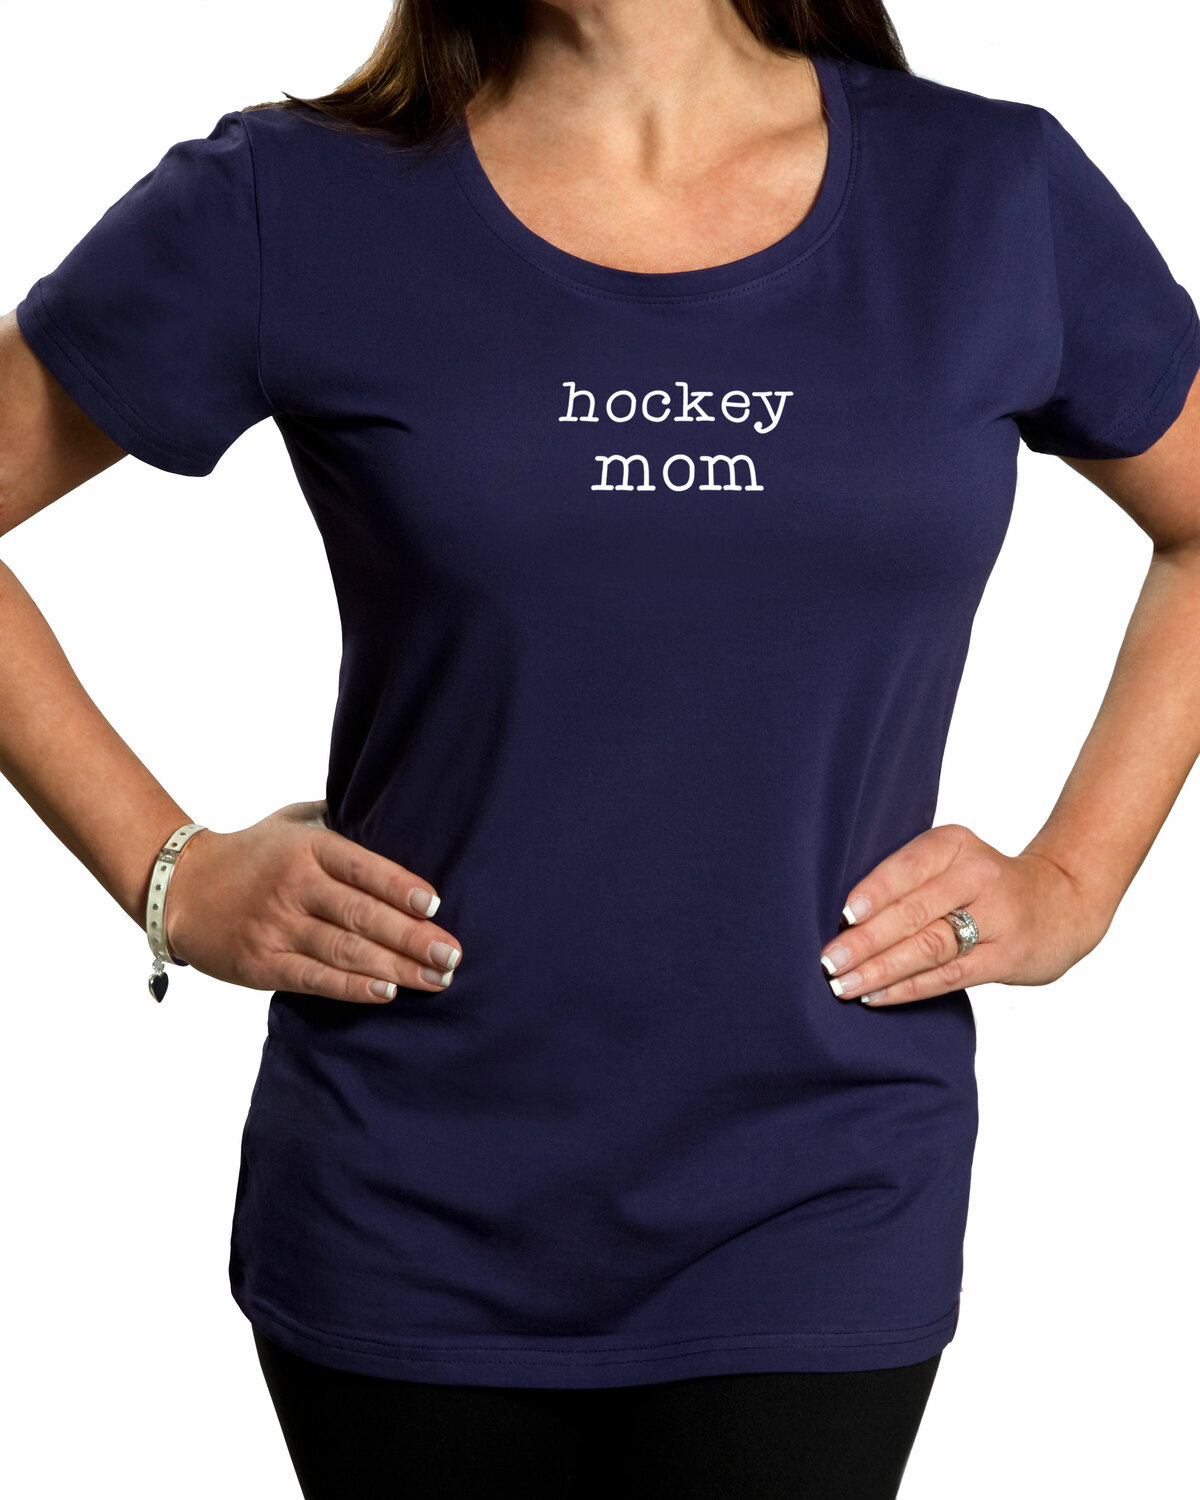 Hockey Mom by Mom Love - Hockey Mom - Small Navy Blue T-Shirt
